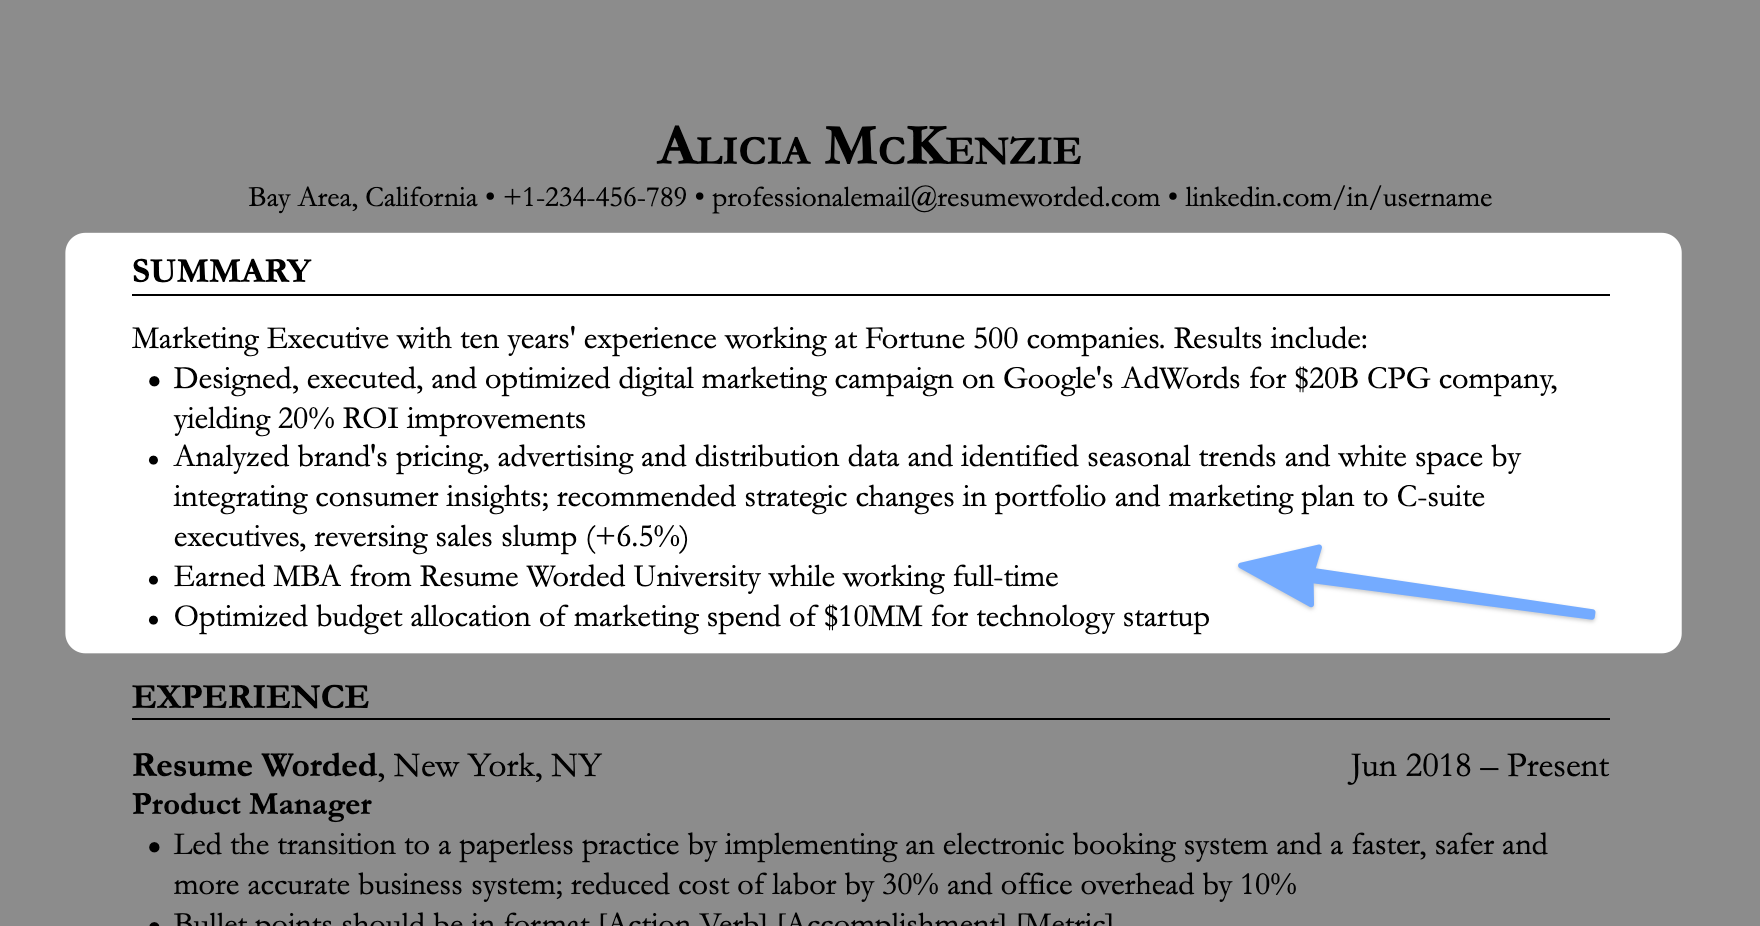 Resume summary example on a marketing executive's resume (screenshot)